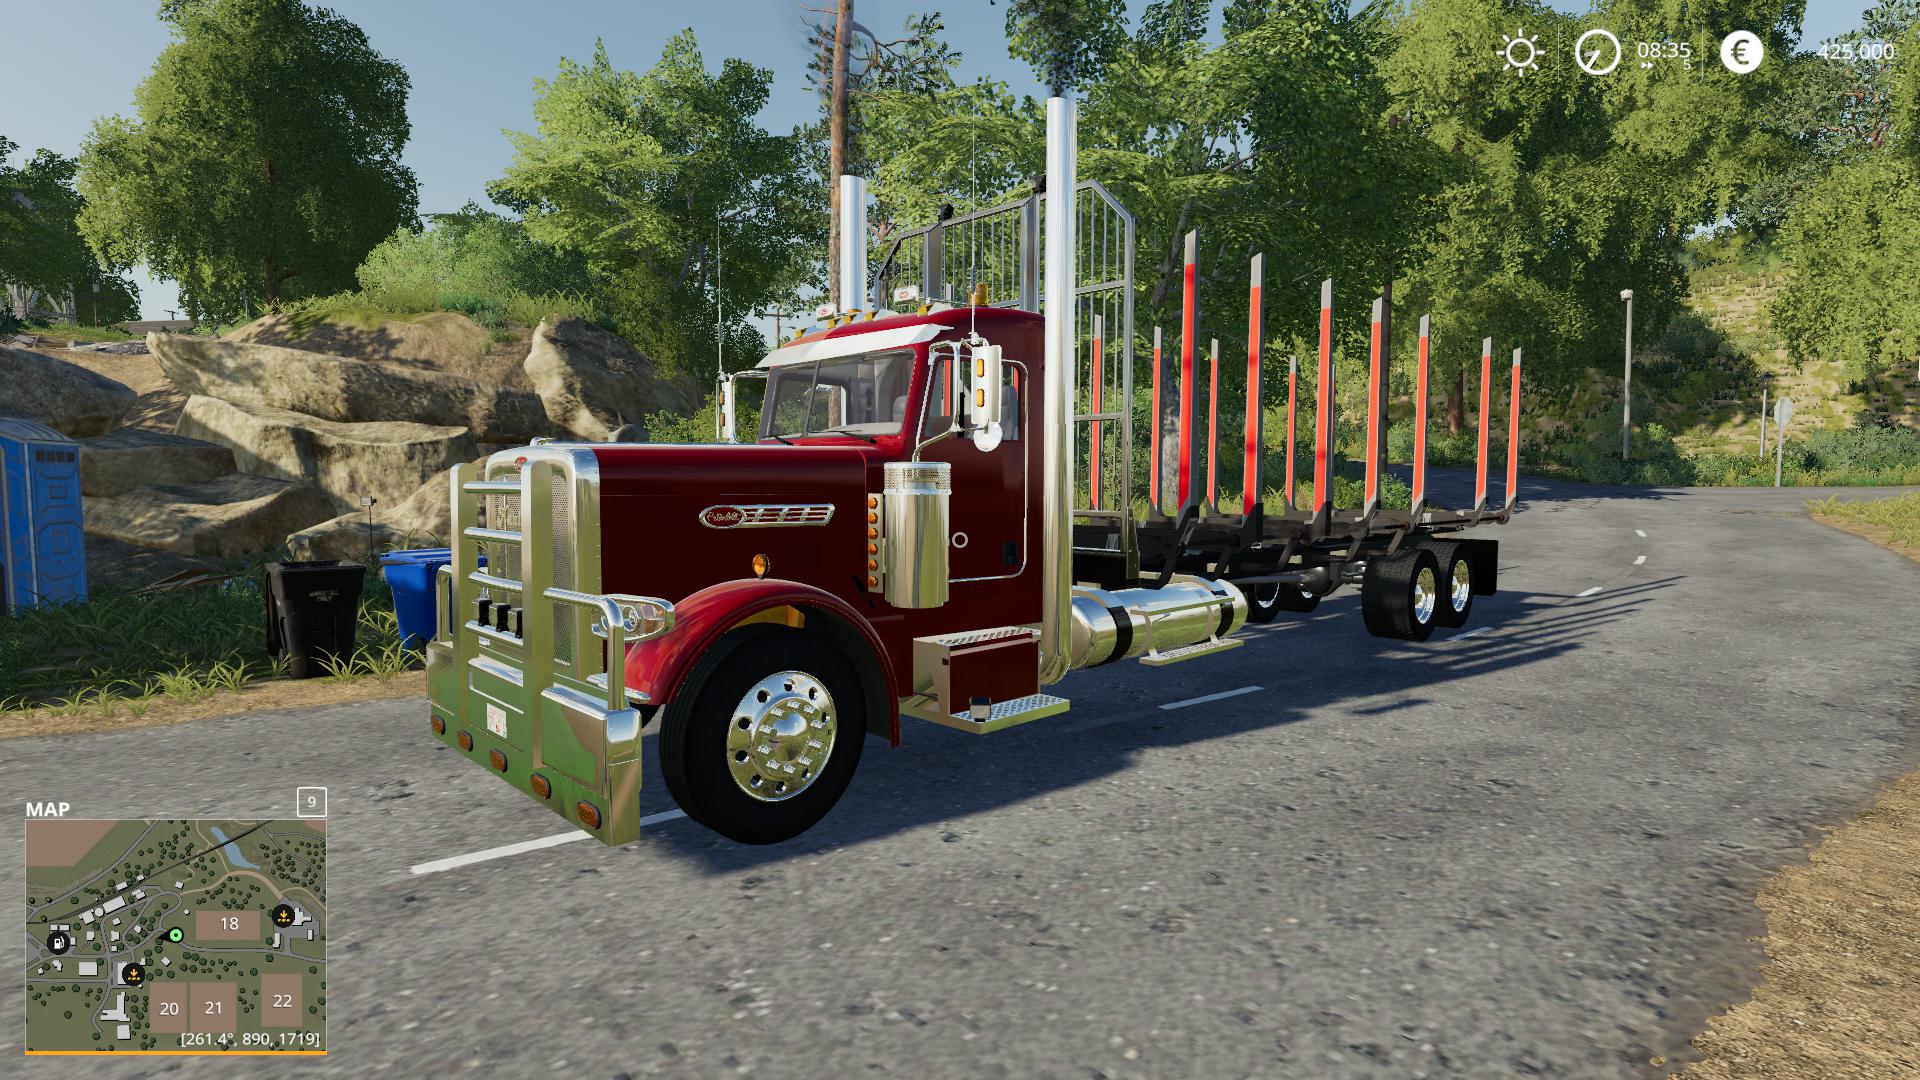 Peterbilt log truck v 1.0